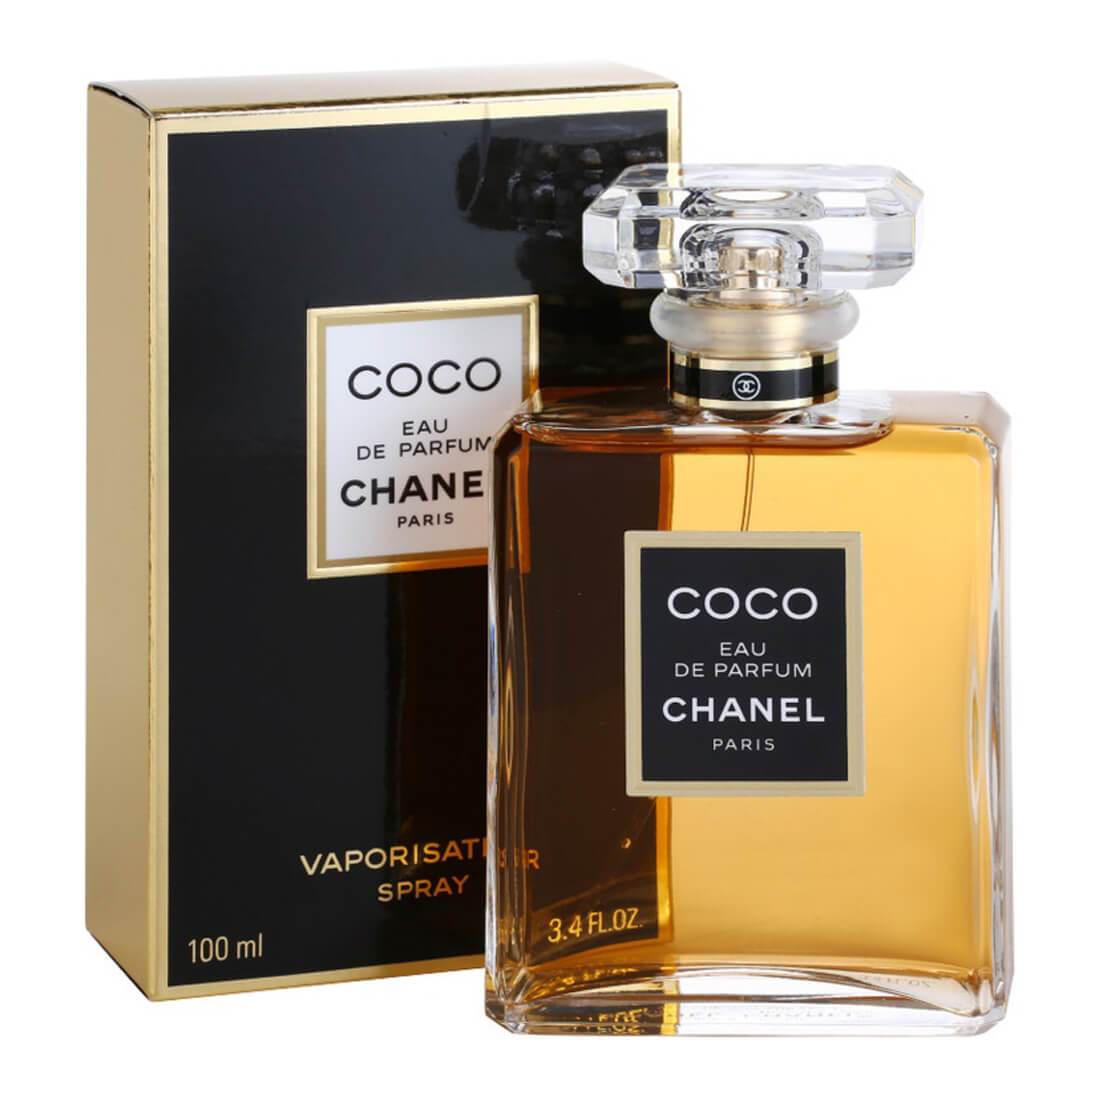 Chanel Coco EDP 100ml - Exquisite Women's Perfume, D'Scentsation